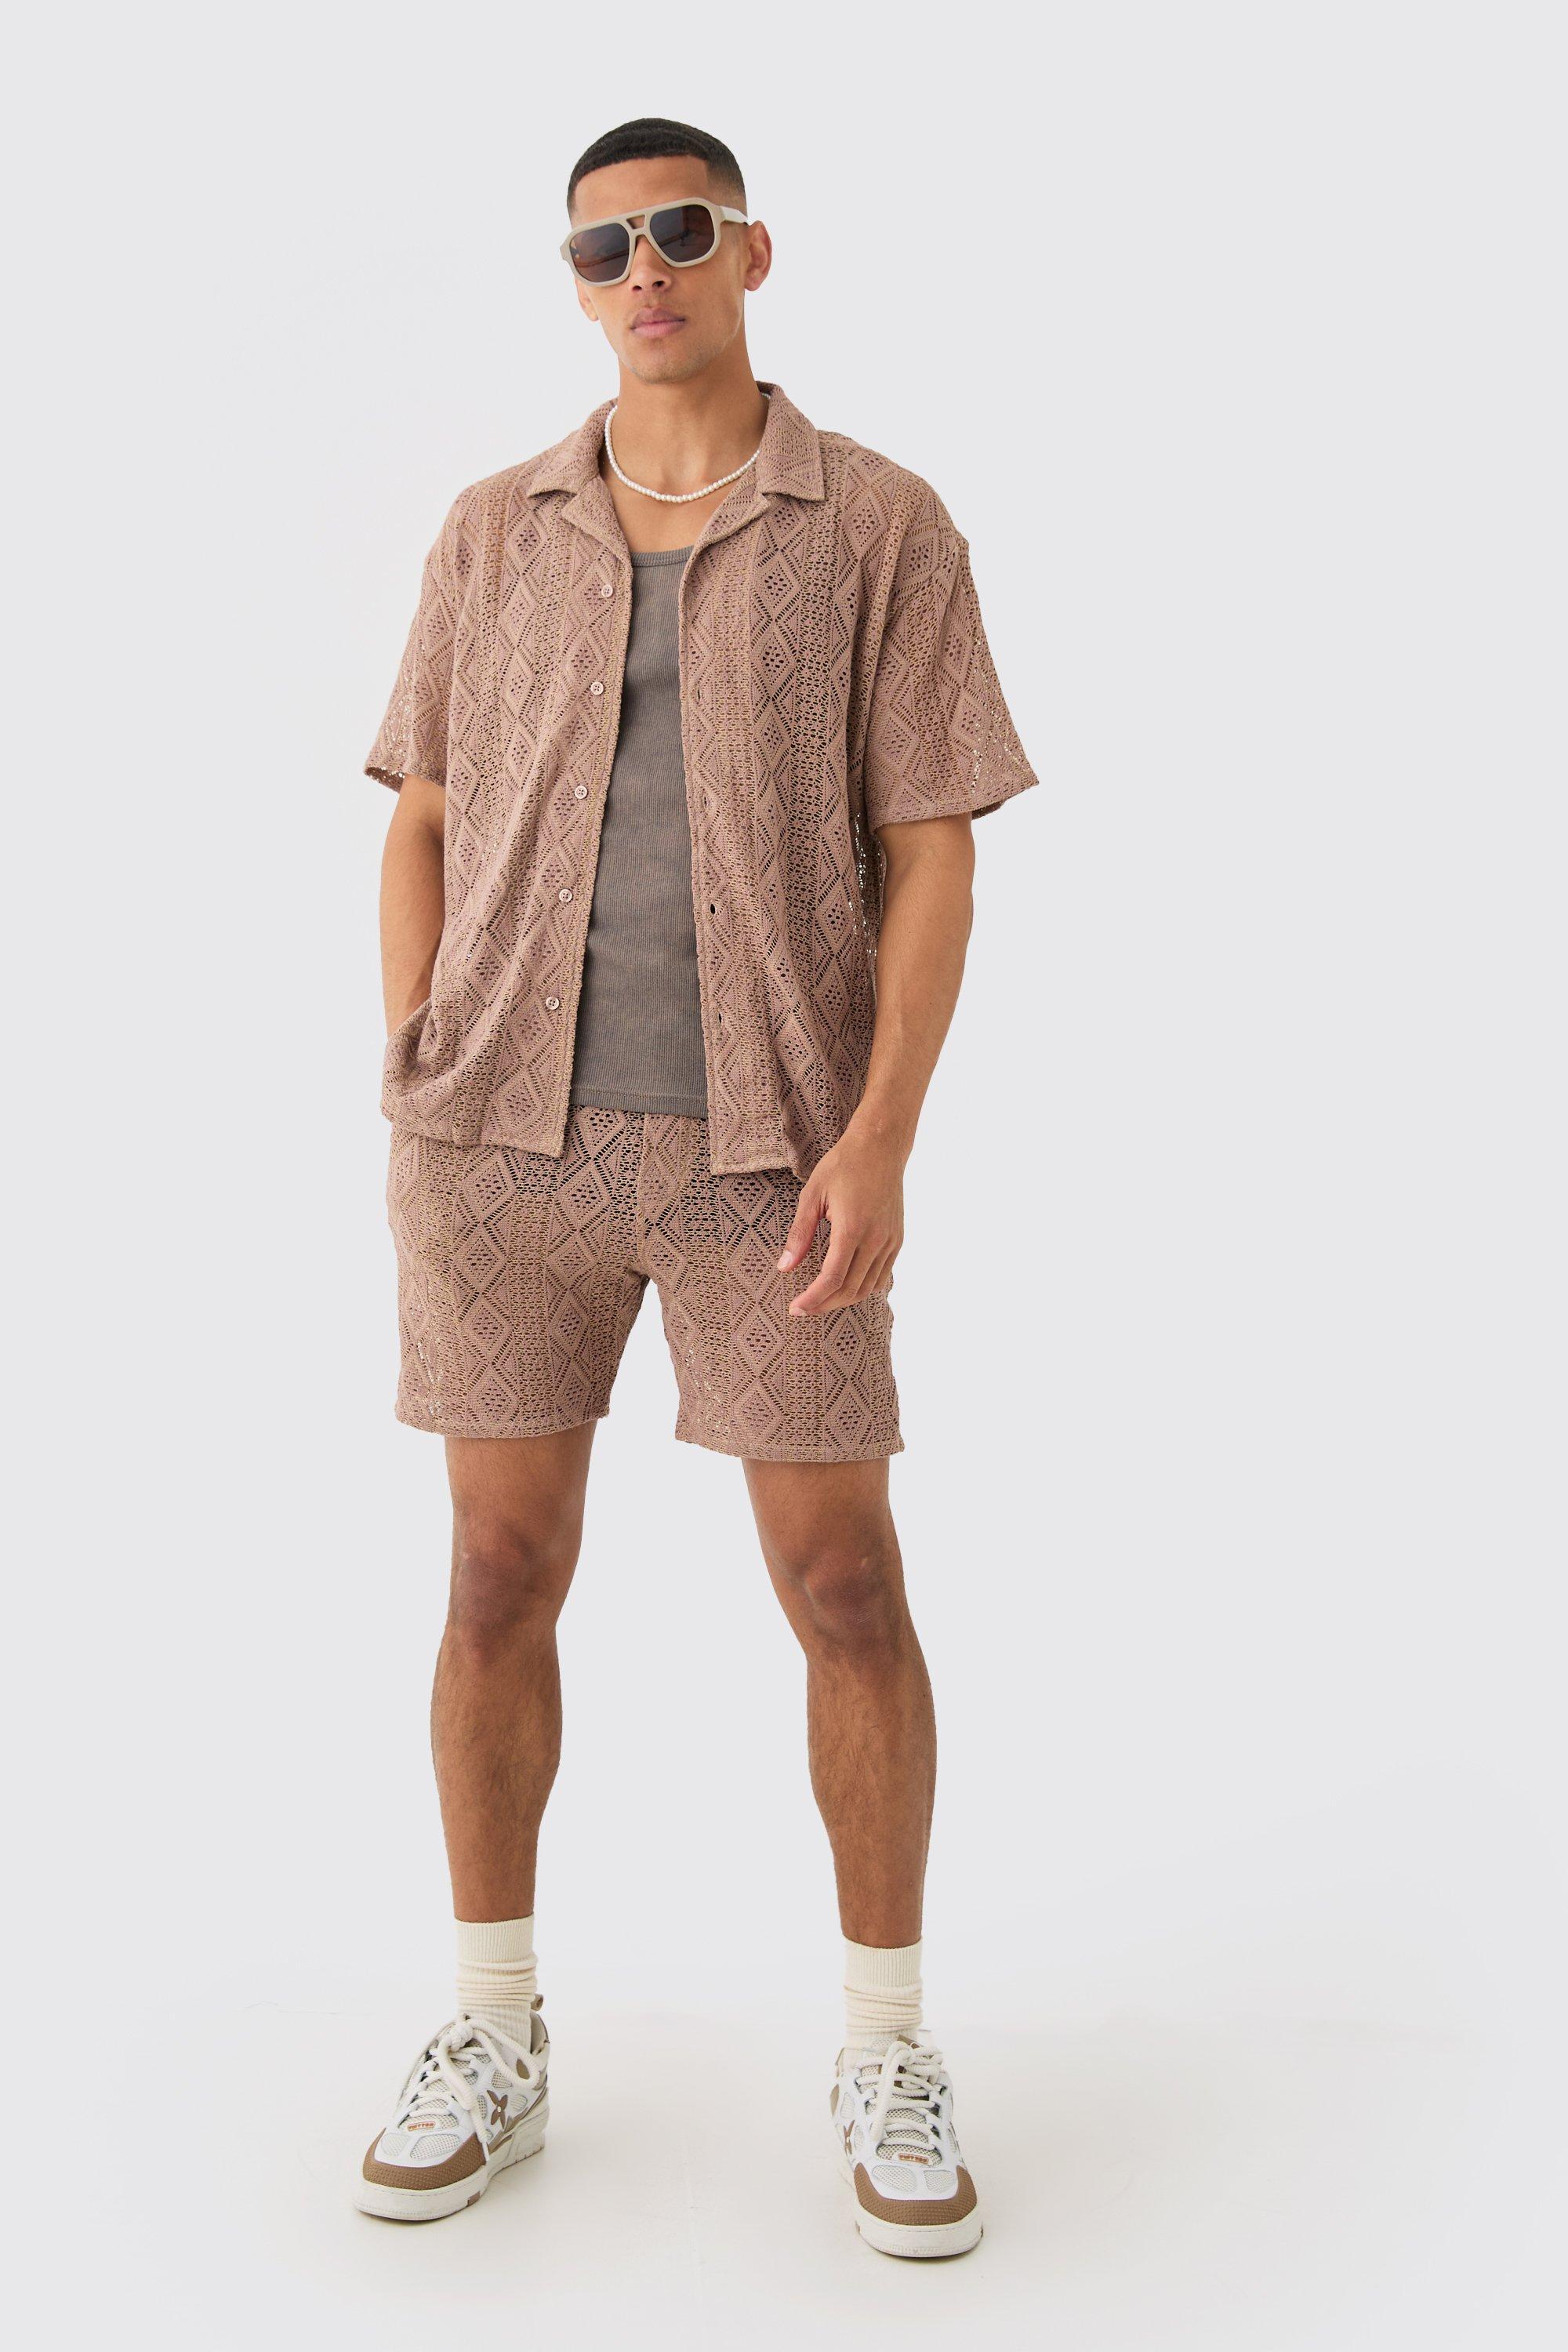 Image of Boxy Crochet Look Shirt & Short, Beige